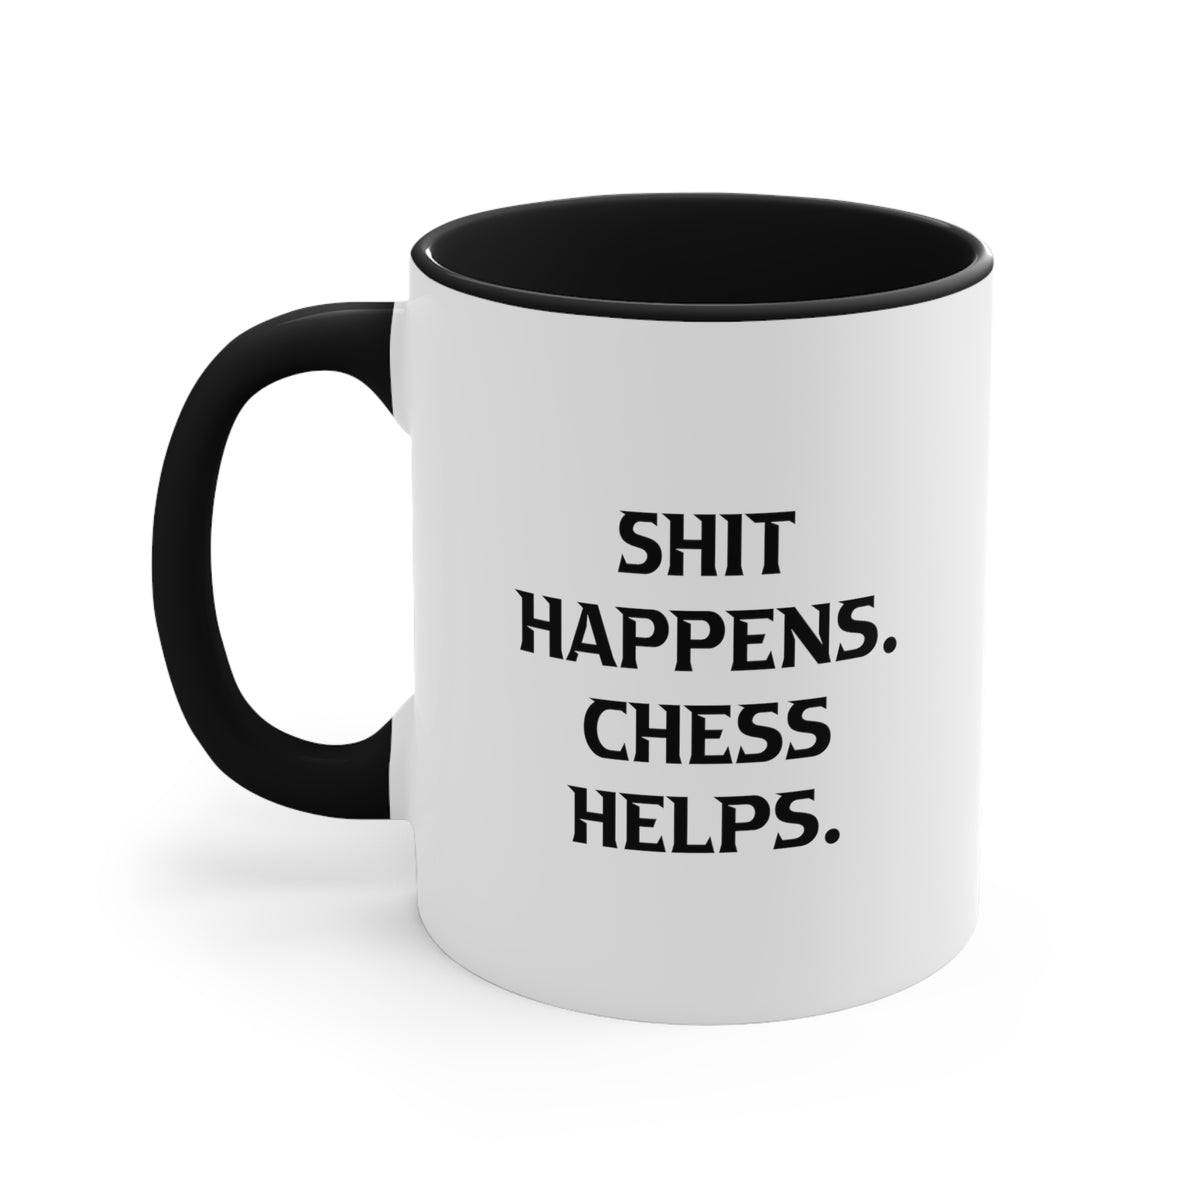 Beautiful Chess Gifts, Happens. Chess Helps, Joke Birthday Two Tone 11oz Mug From Men Women, Chess set, Player chess, Coffee mug, Tea mug, Gift for chess lover, Gift for coffee lover